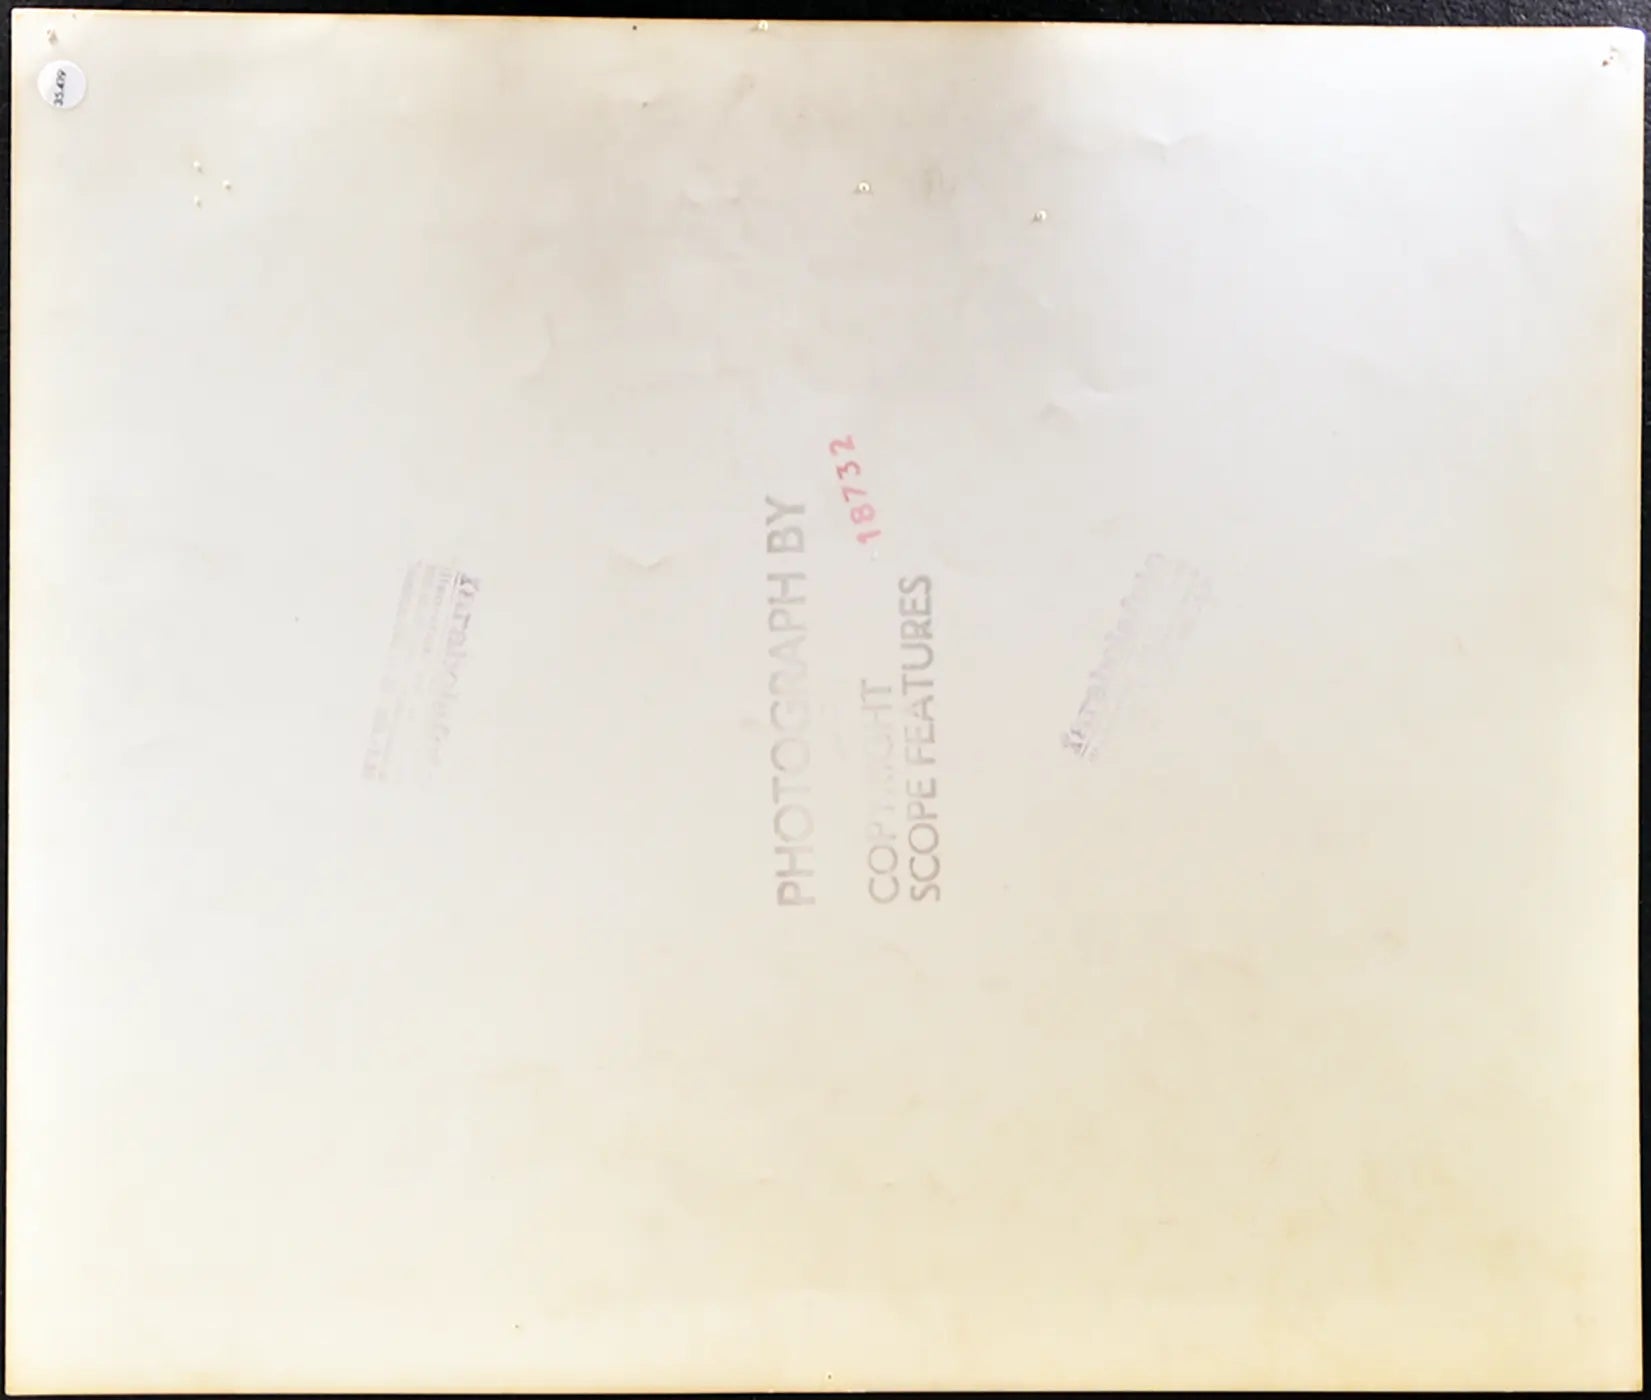 Basset-hound e gattino Ft 35419 - Stampa 30x34 cm - Farabola Stampa ai sali d'argento